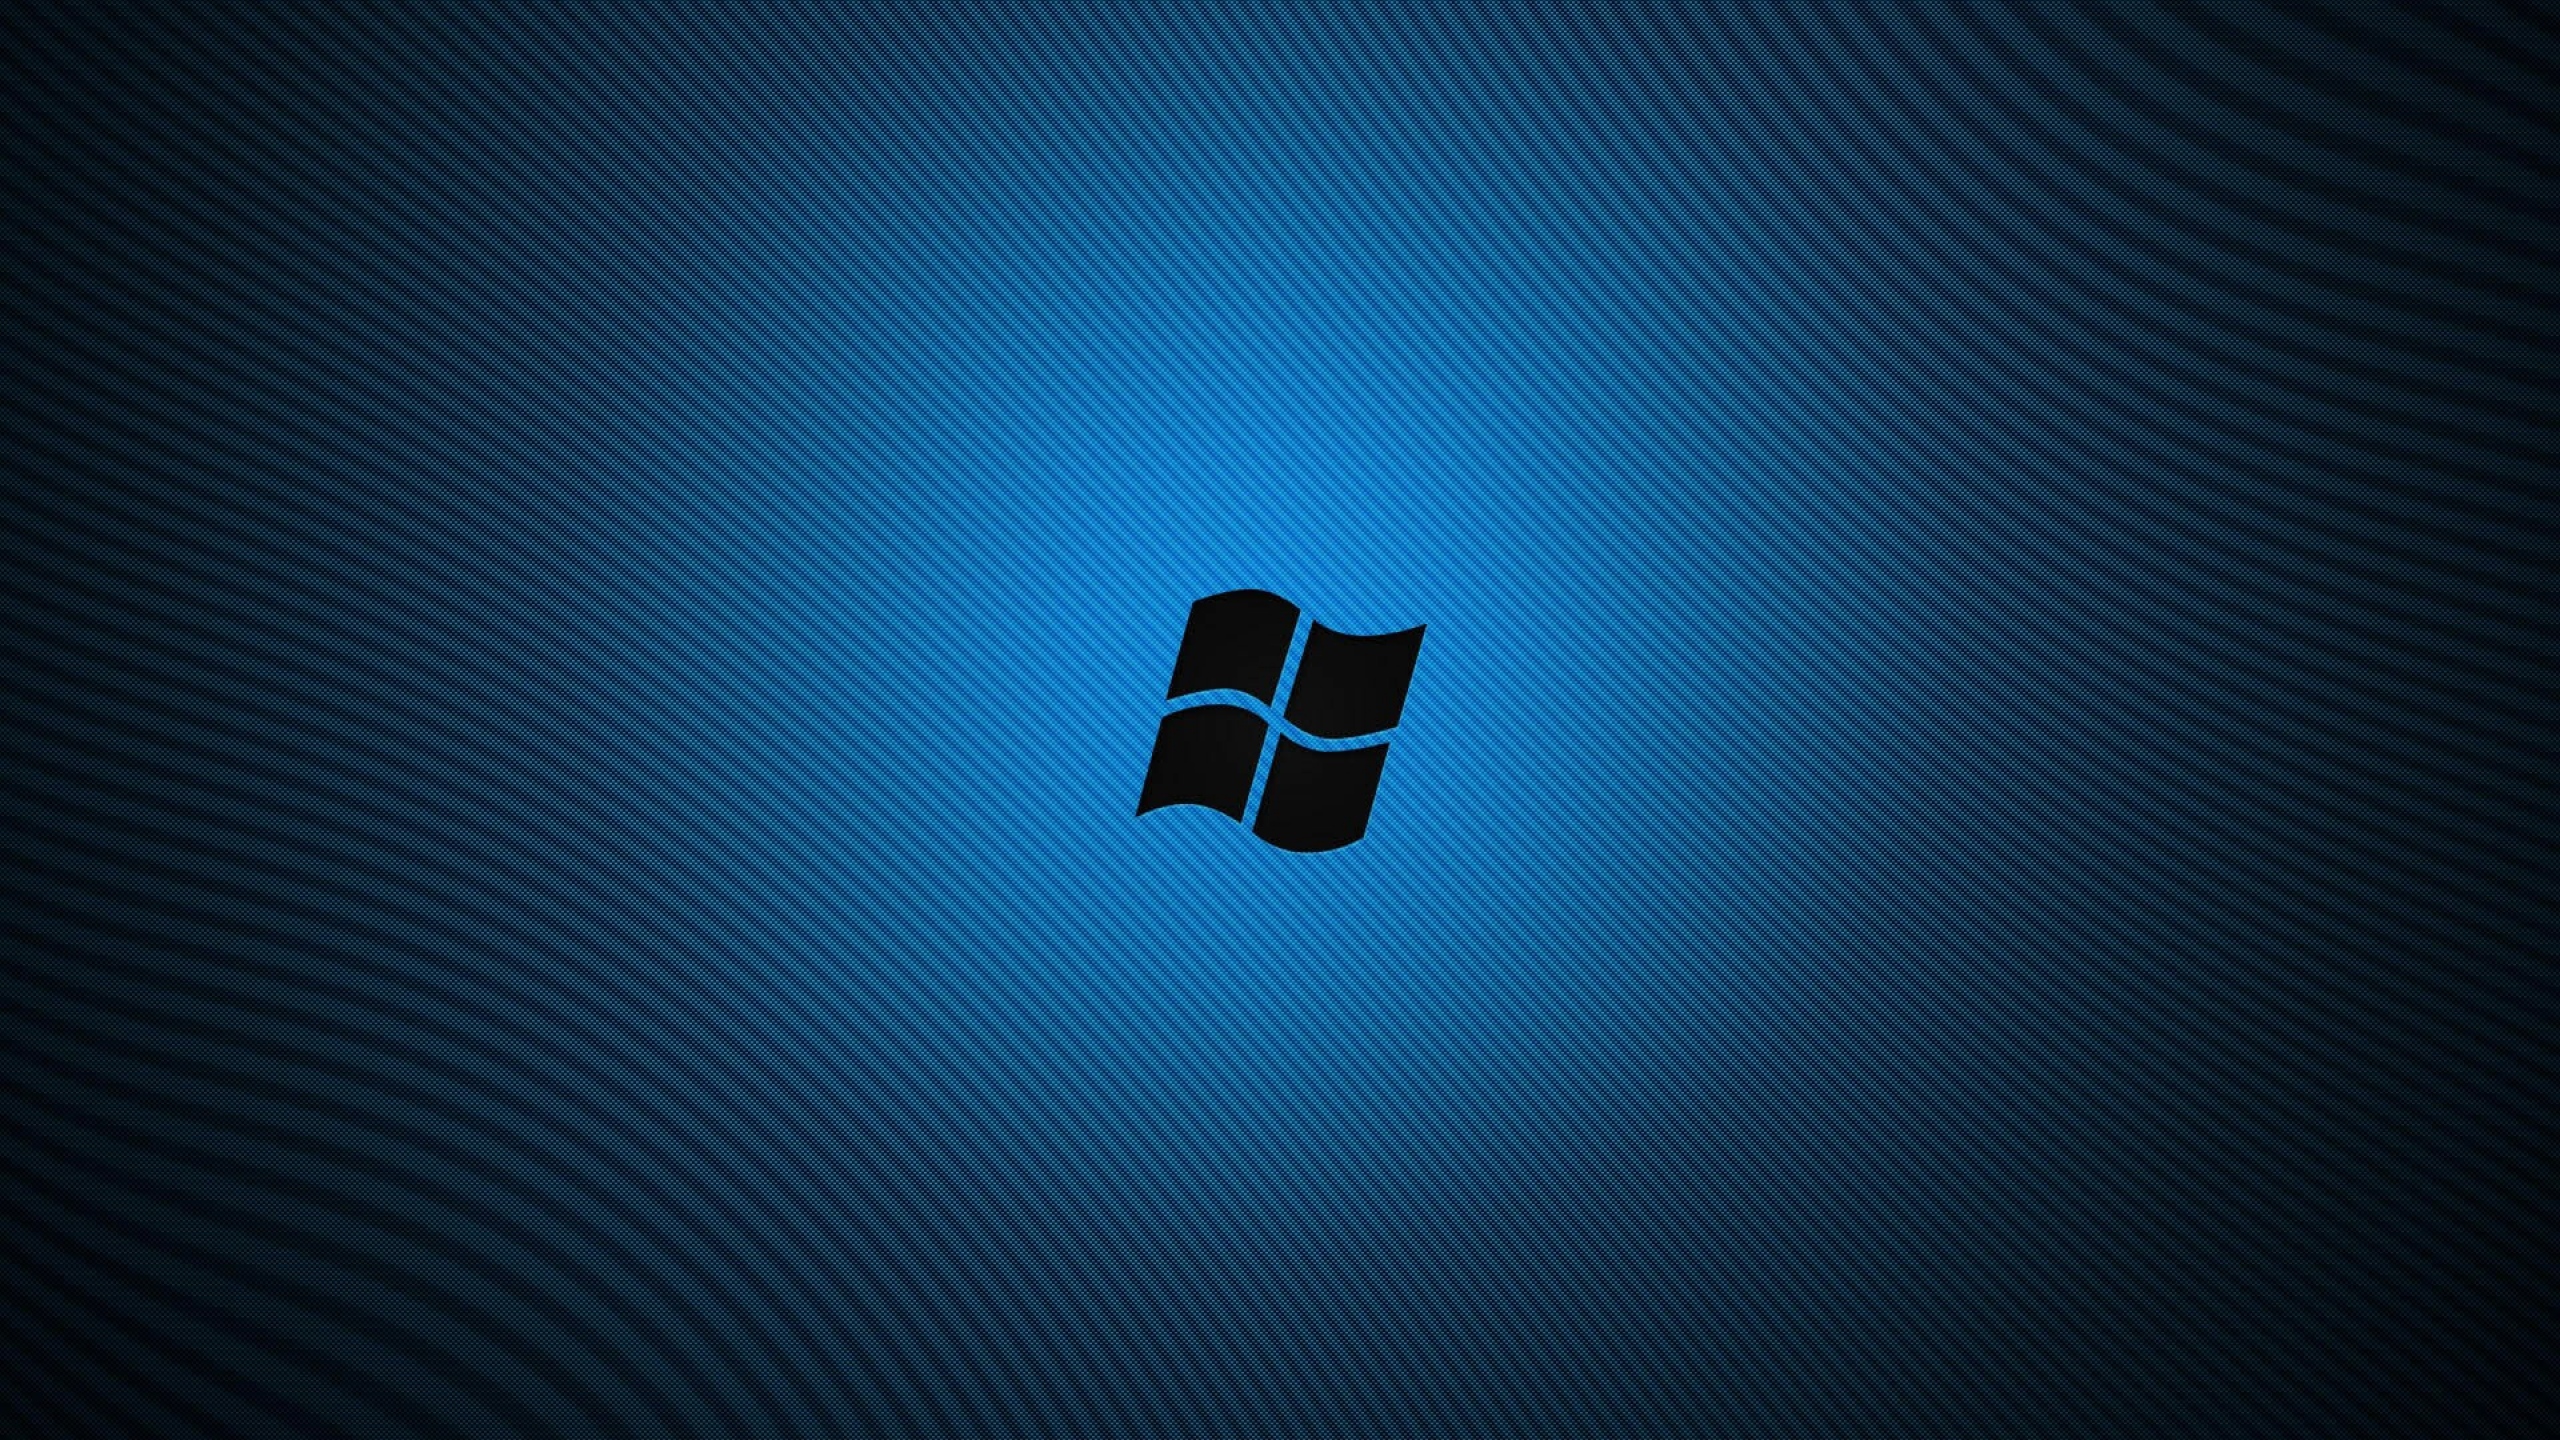  2560x1440 Windows Blue Black Logo Wallpaper Background Mac iMac 27